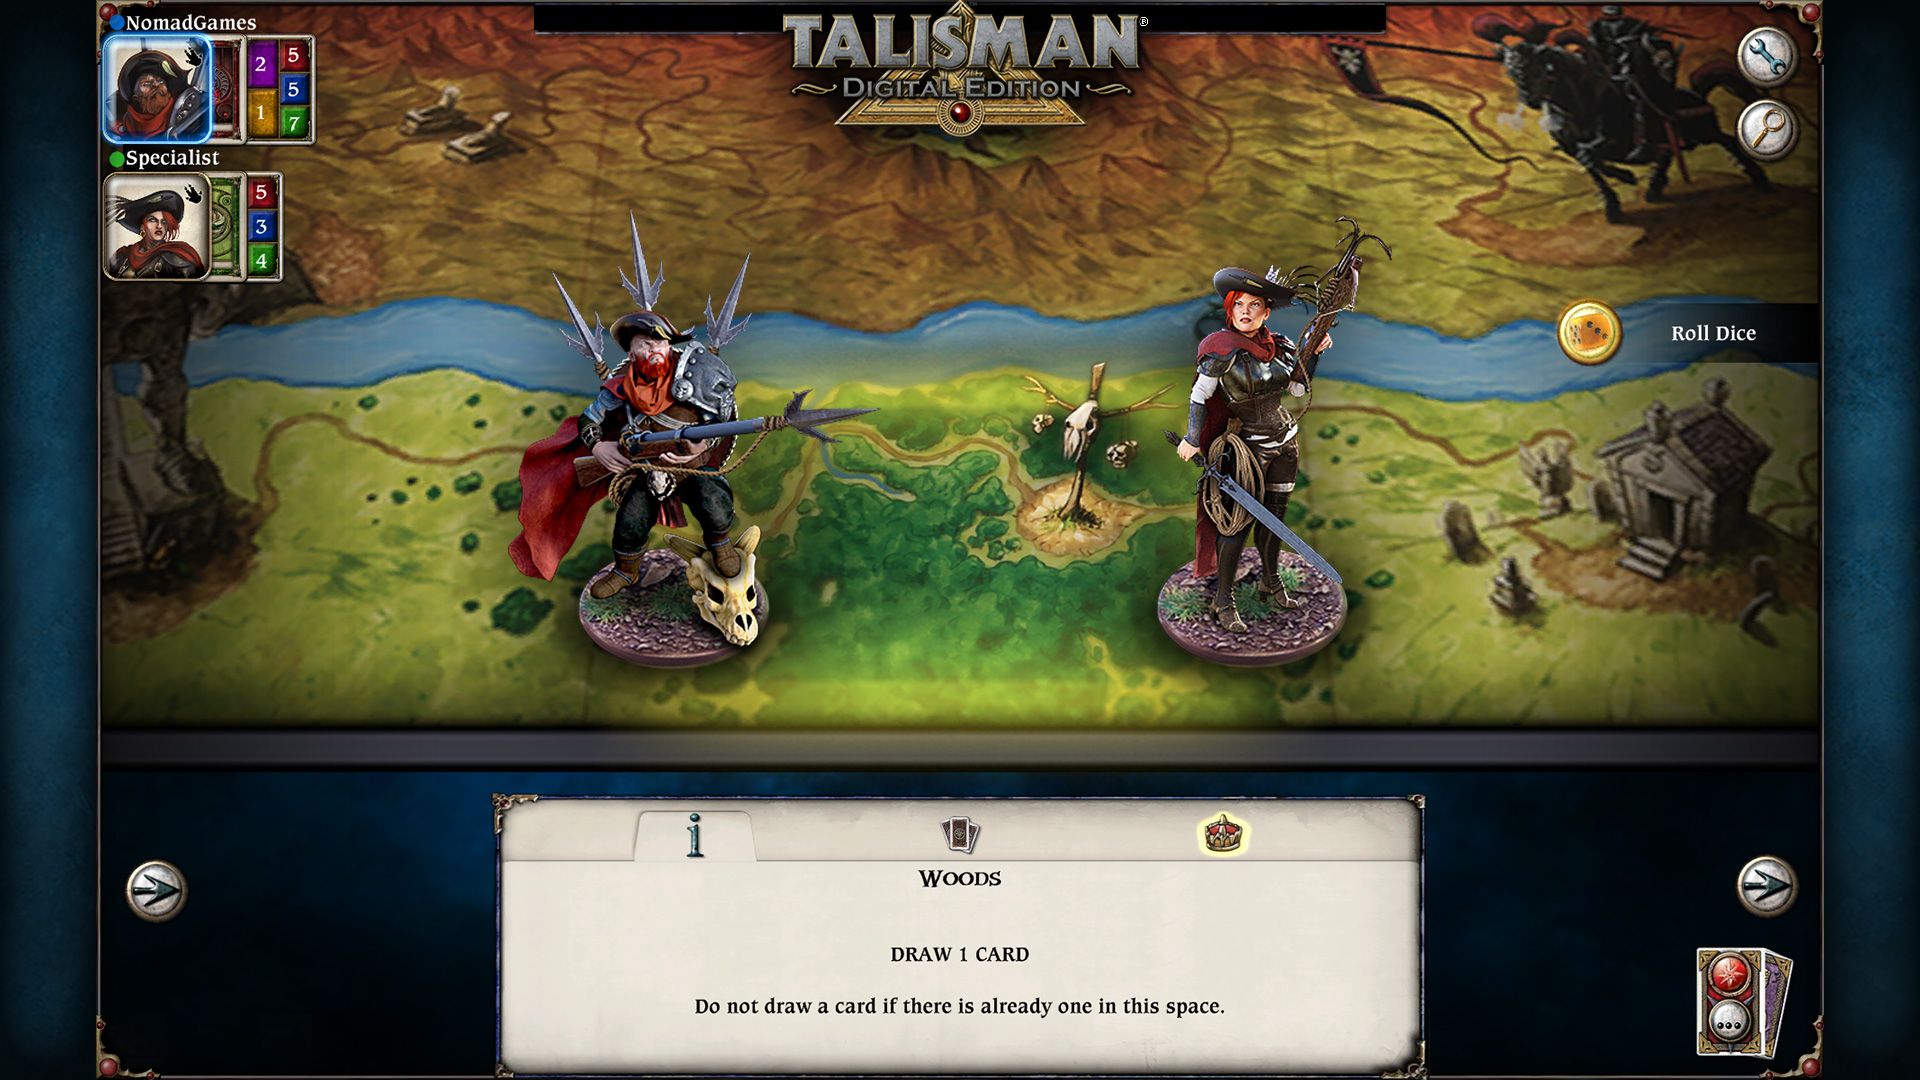 Talisman - The Ancient Beasts Expansion DLC Steam CD Key